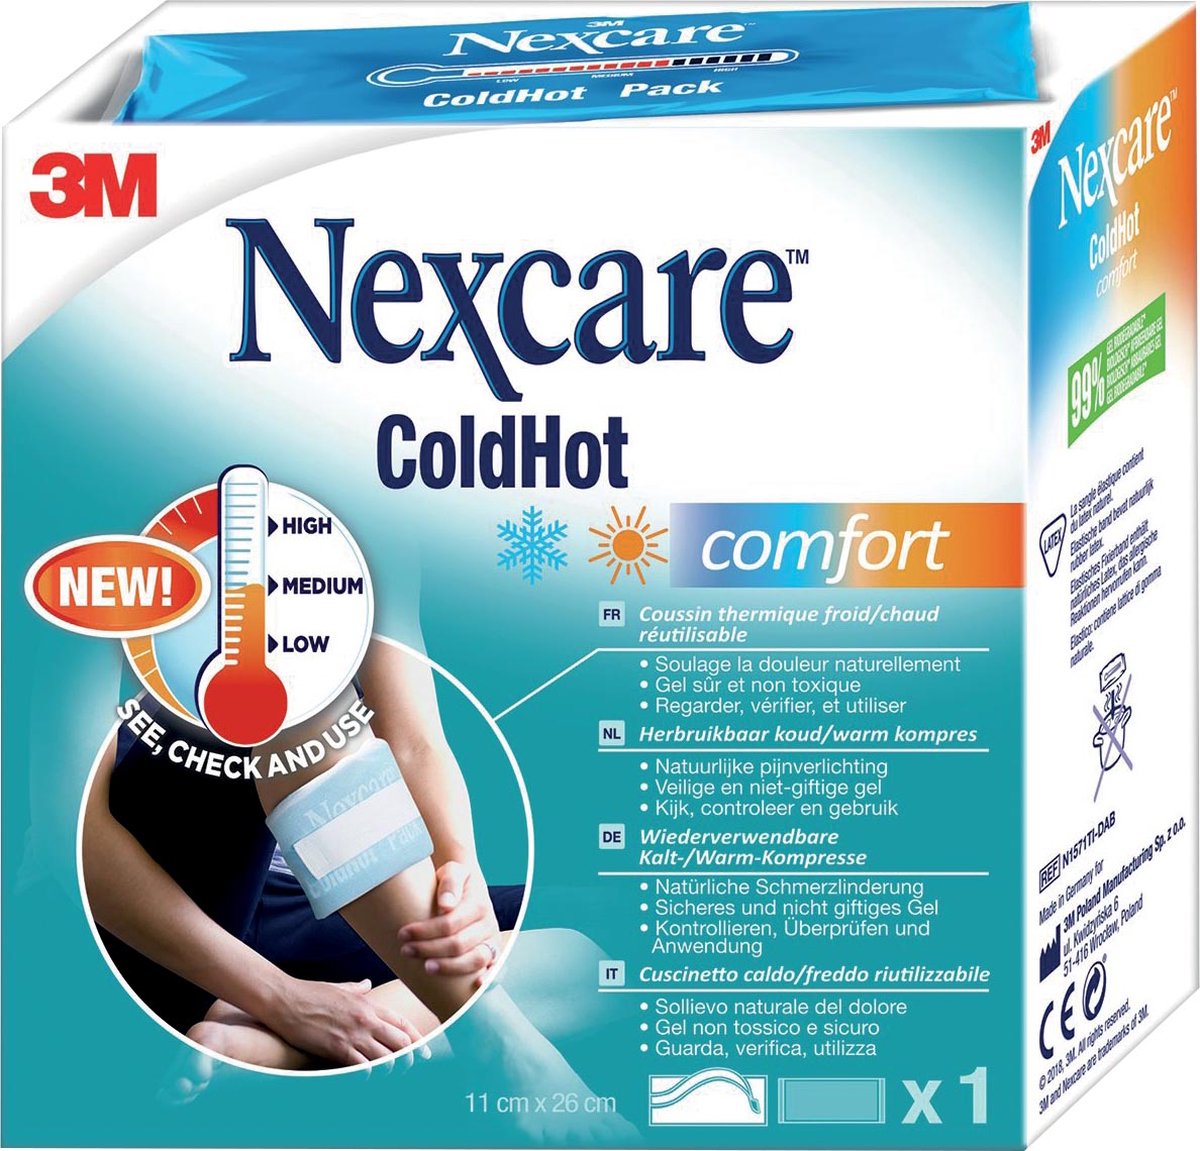 3M™ N1571-1 Nexcare ColdHot Comfort koud-/warmkompres